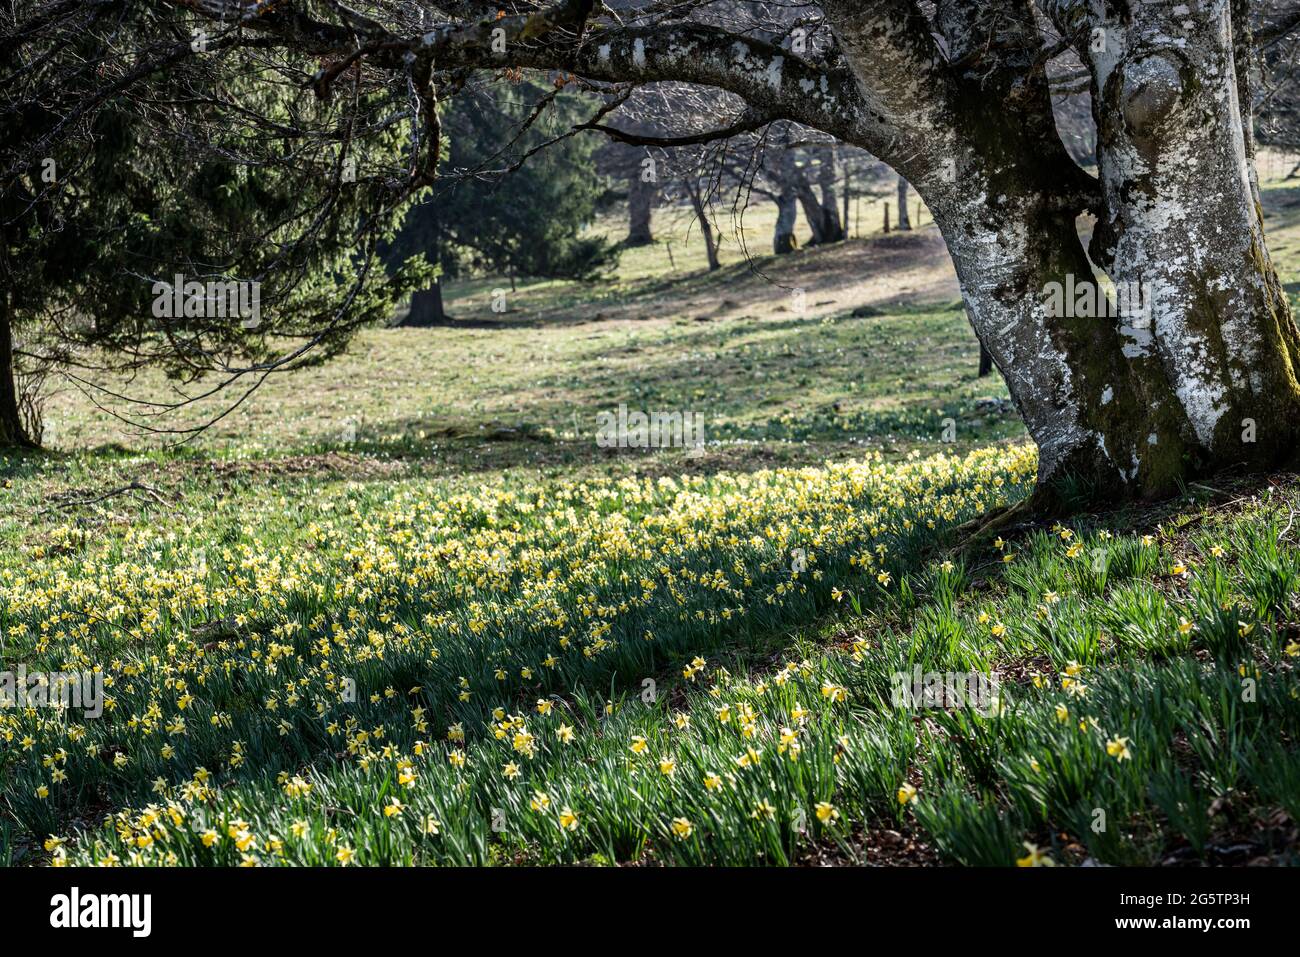 Frühlingsaspekt mit Jonquilles (Gelbe Narzisse) auf den Wiesen von Les Prés-d'Orvin am 30.03.17. Stock Photo